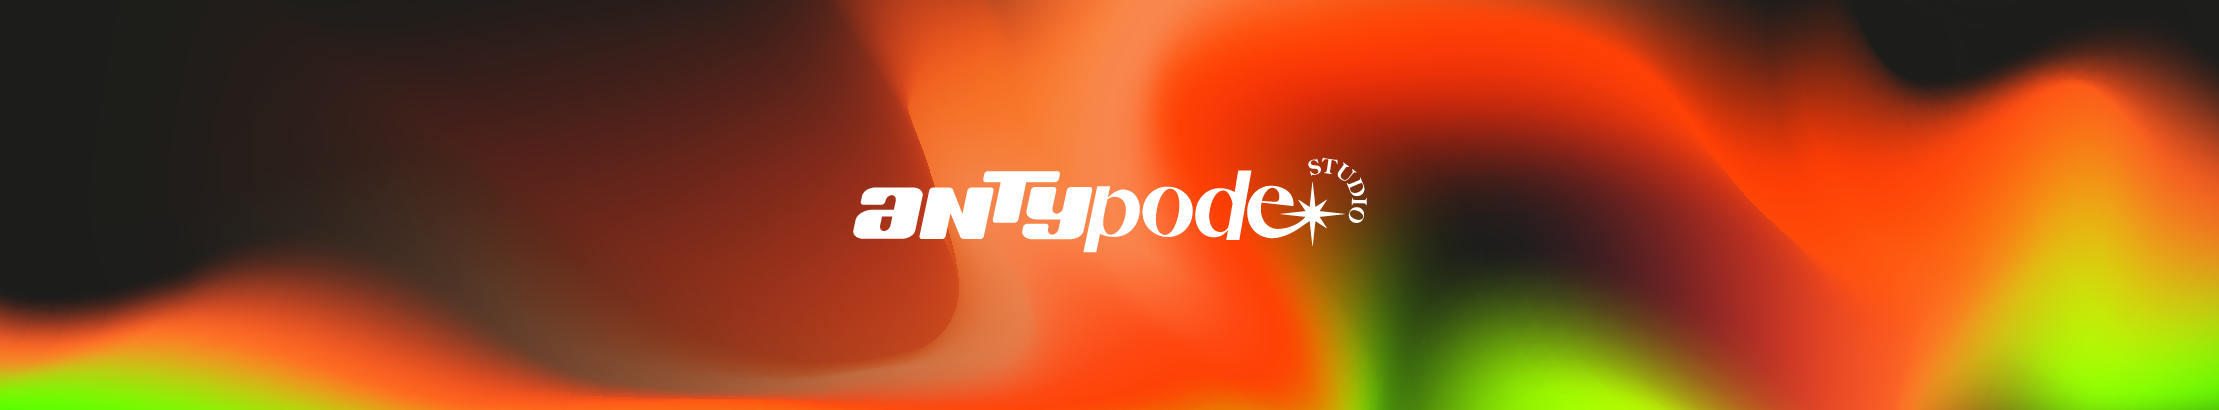 Antypode Studios profilbanner